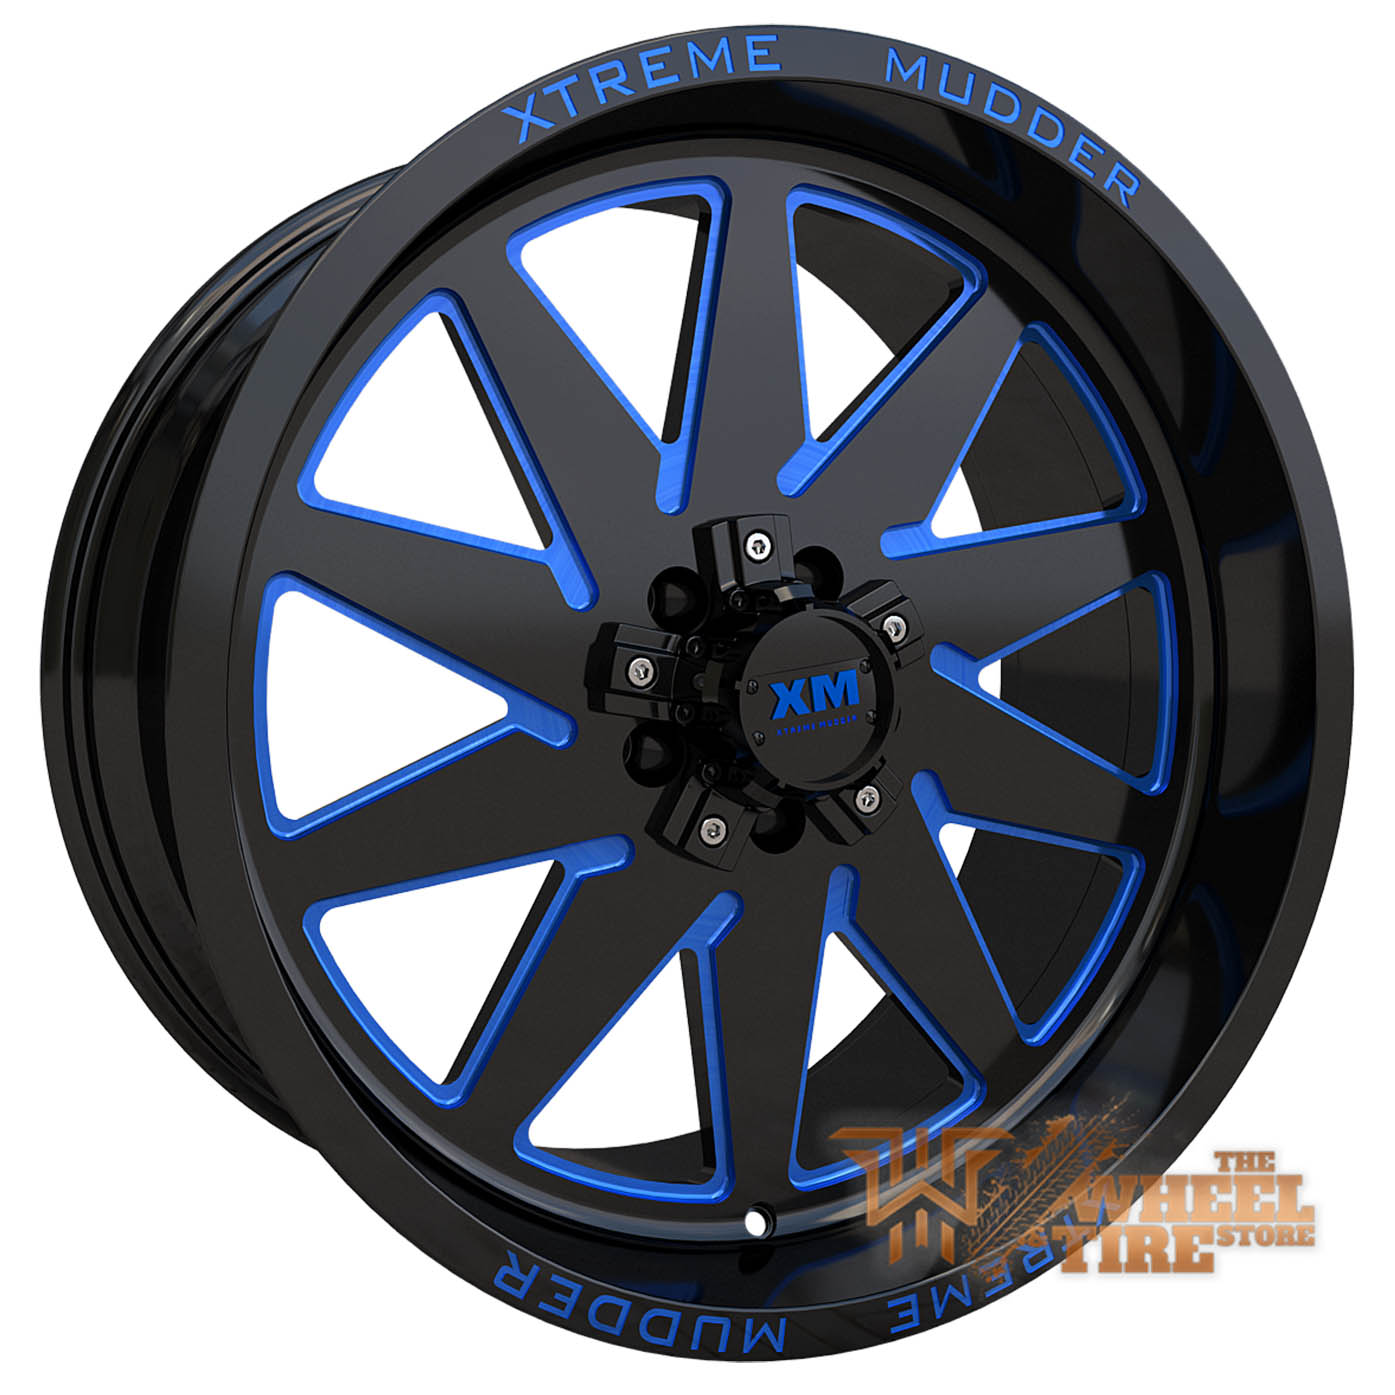 XTREME MUDDER XM-348 Wheel in Gloss Black Blue Milled (Set of 4)